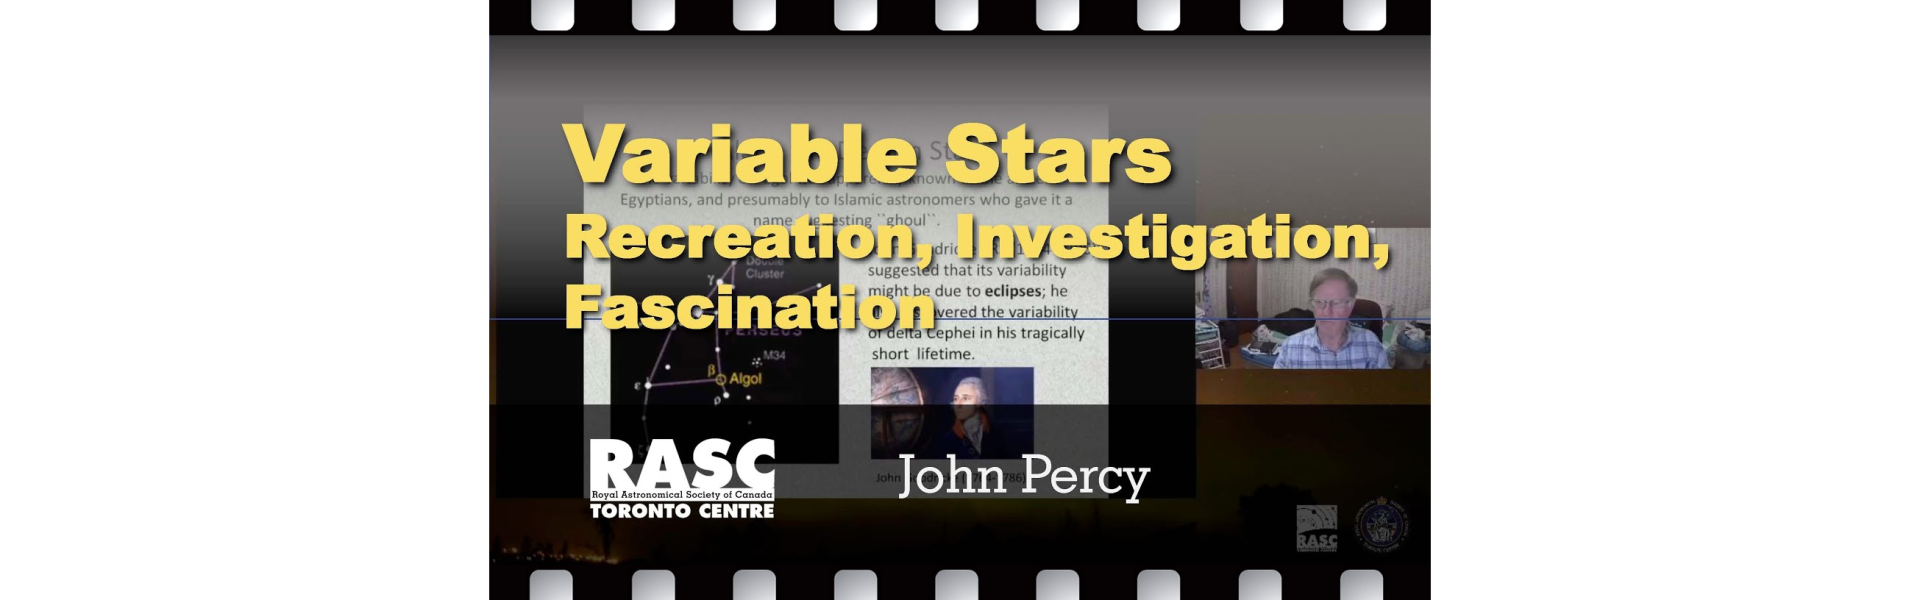 Variable Stars with John Percy